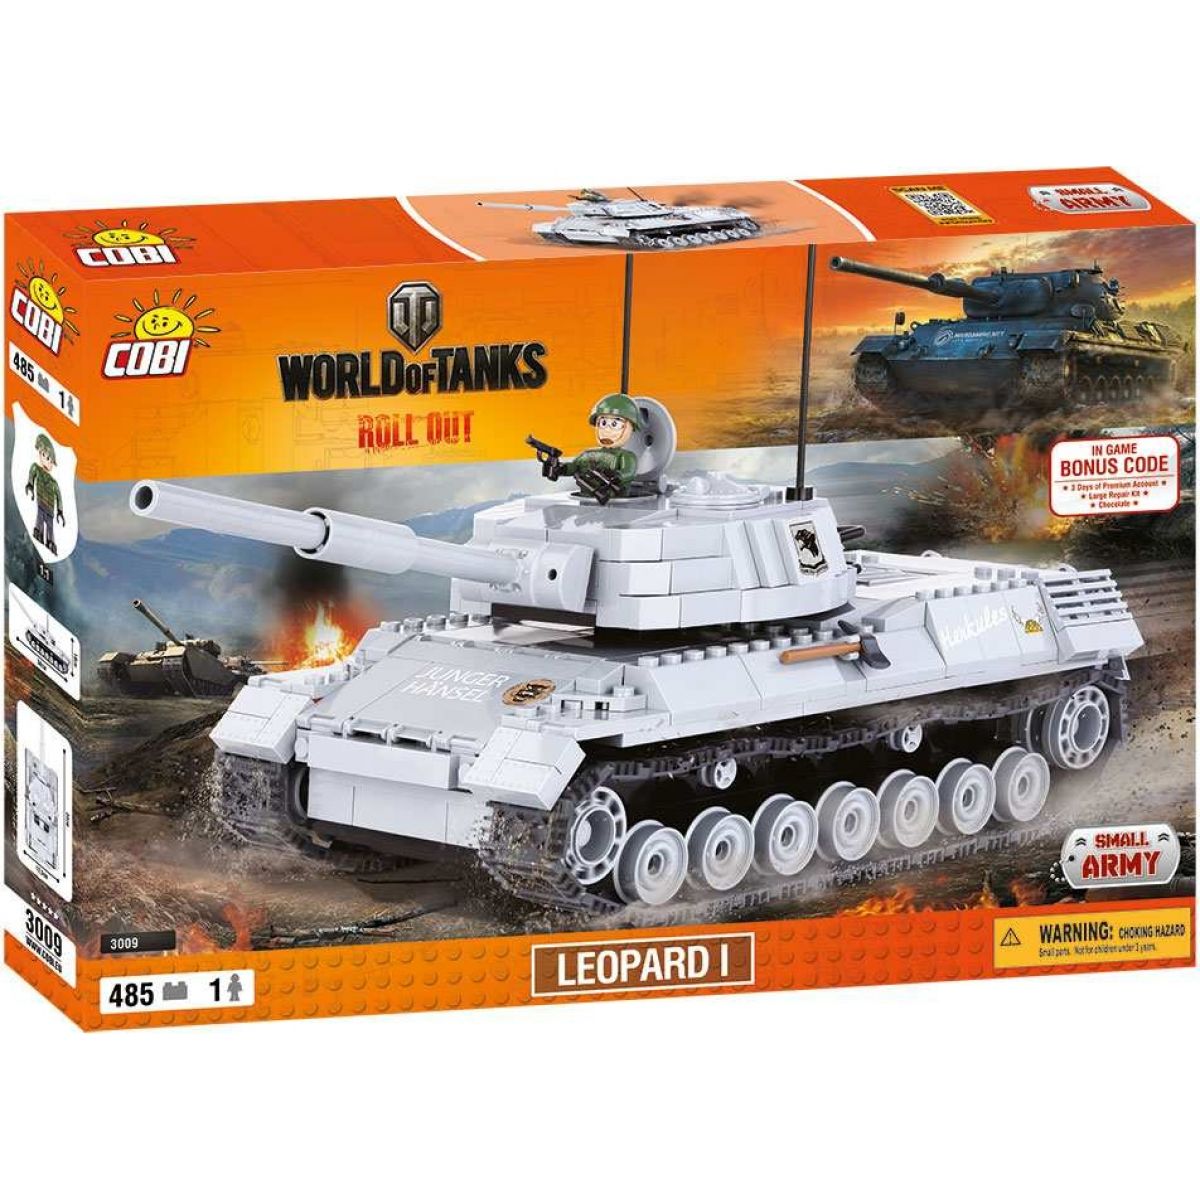 COBI 3009 World of Tanks Leopard I 485 k 1 f